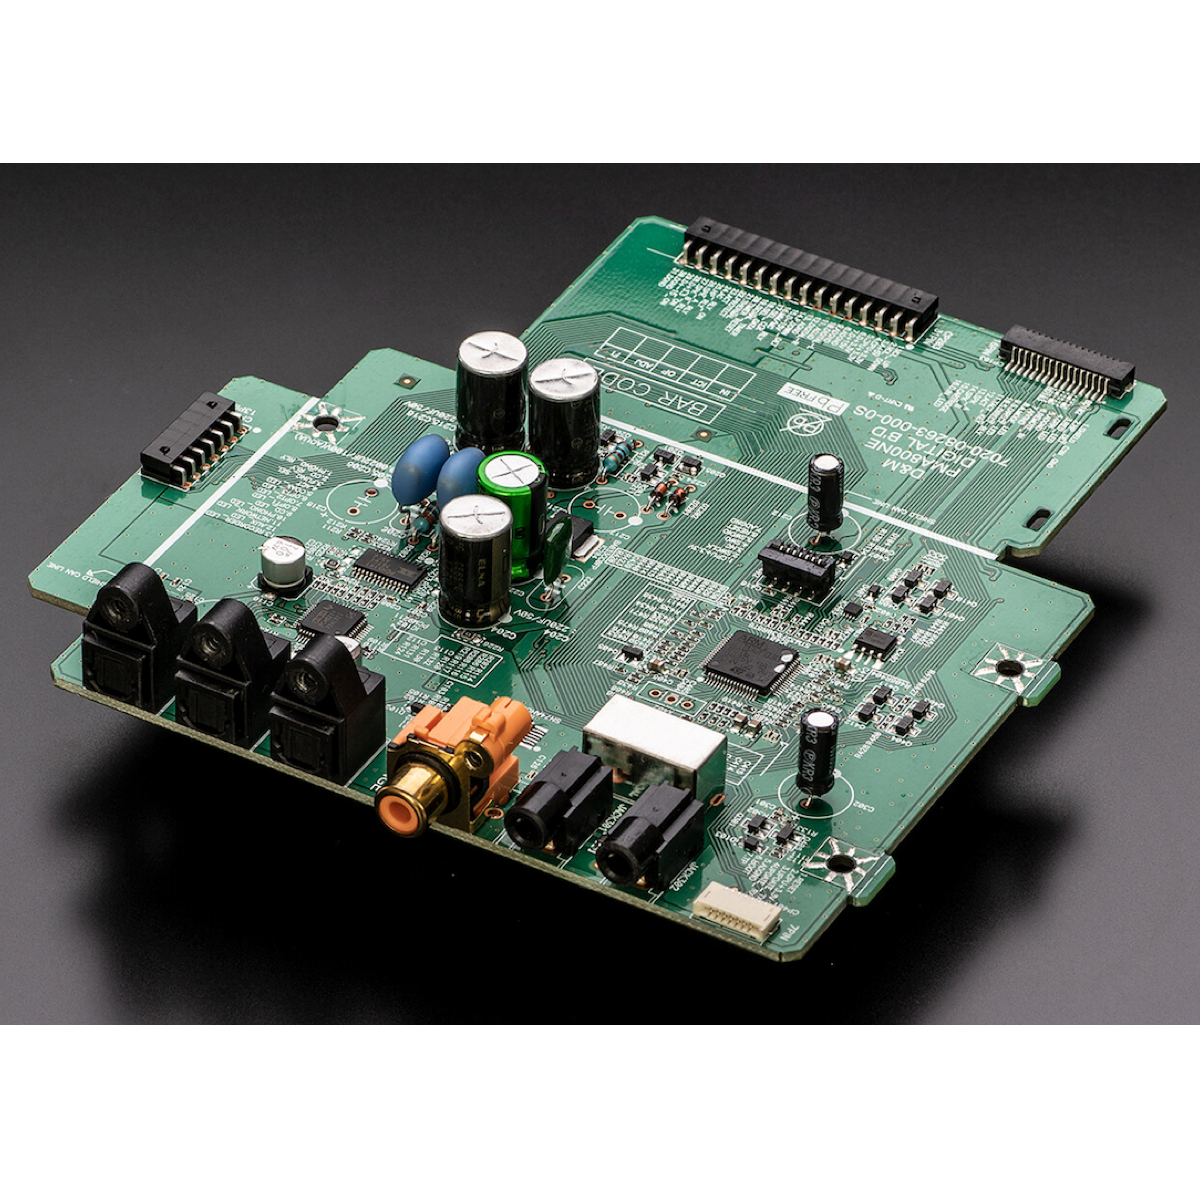 Denon PMA-800NE - Integrated Stereo Amplifier - AVStore